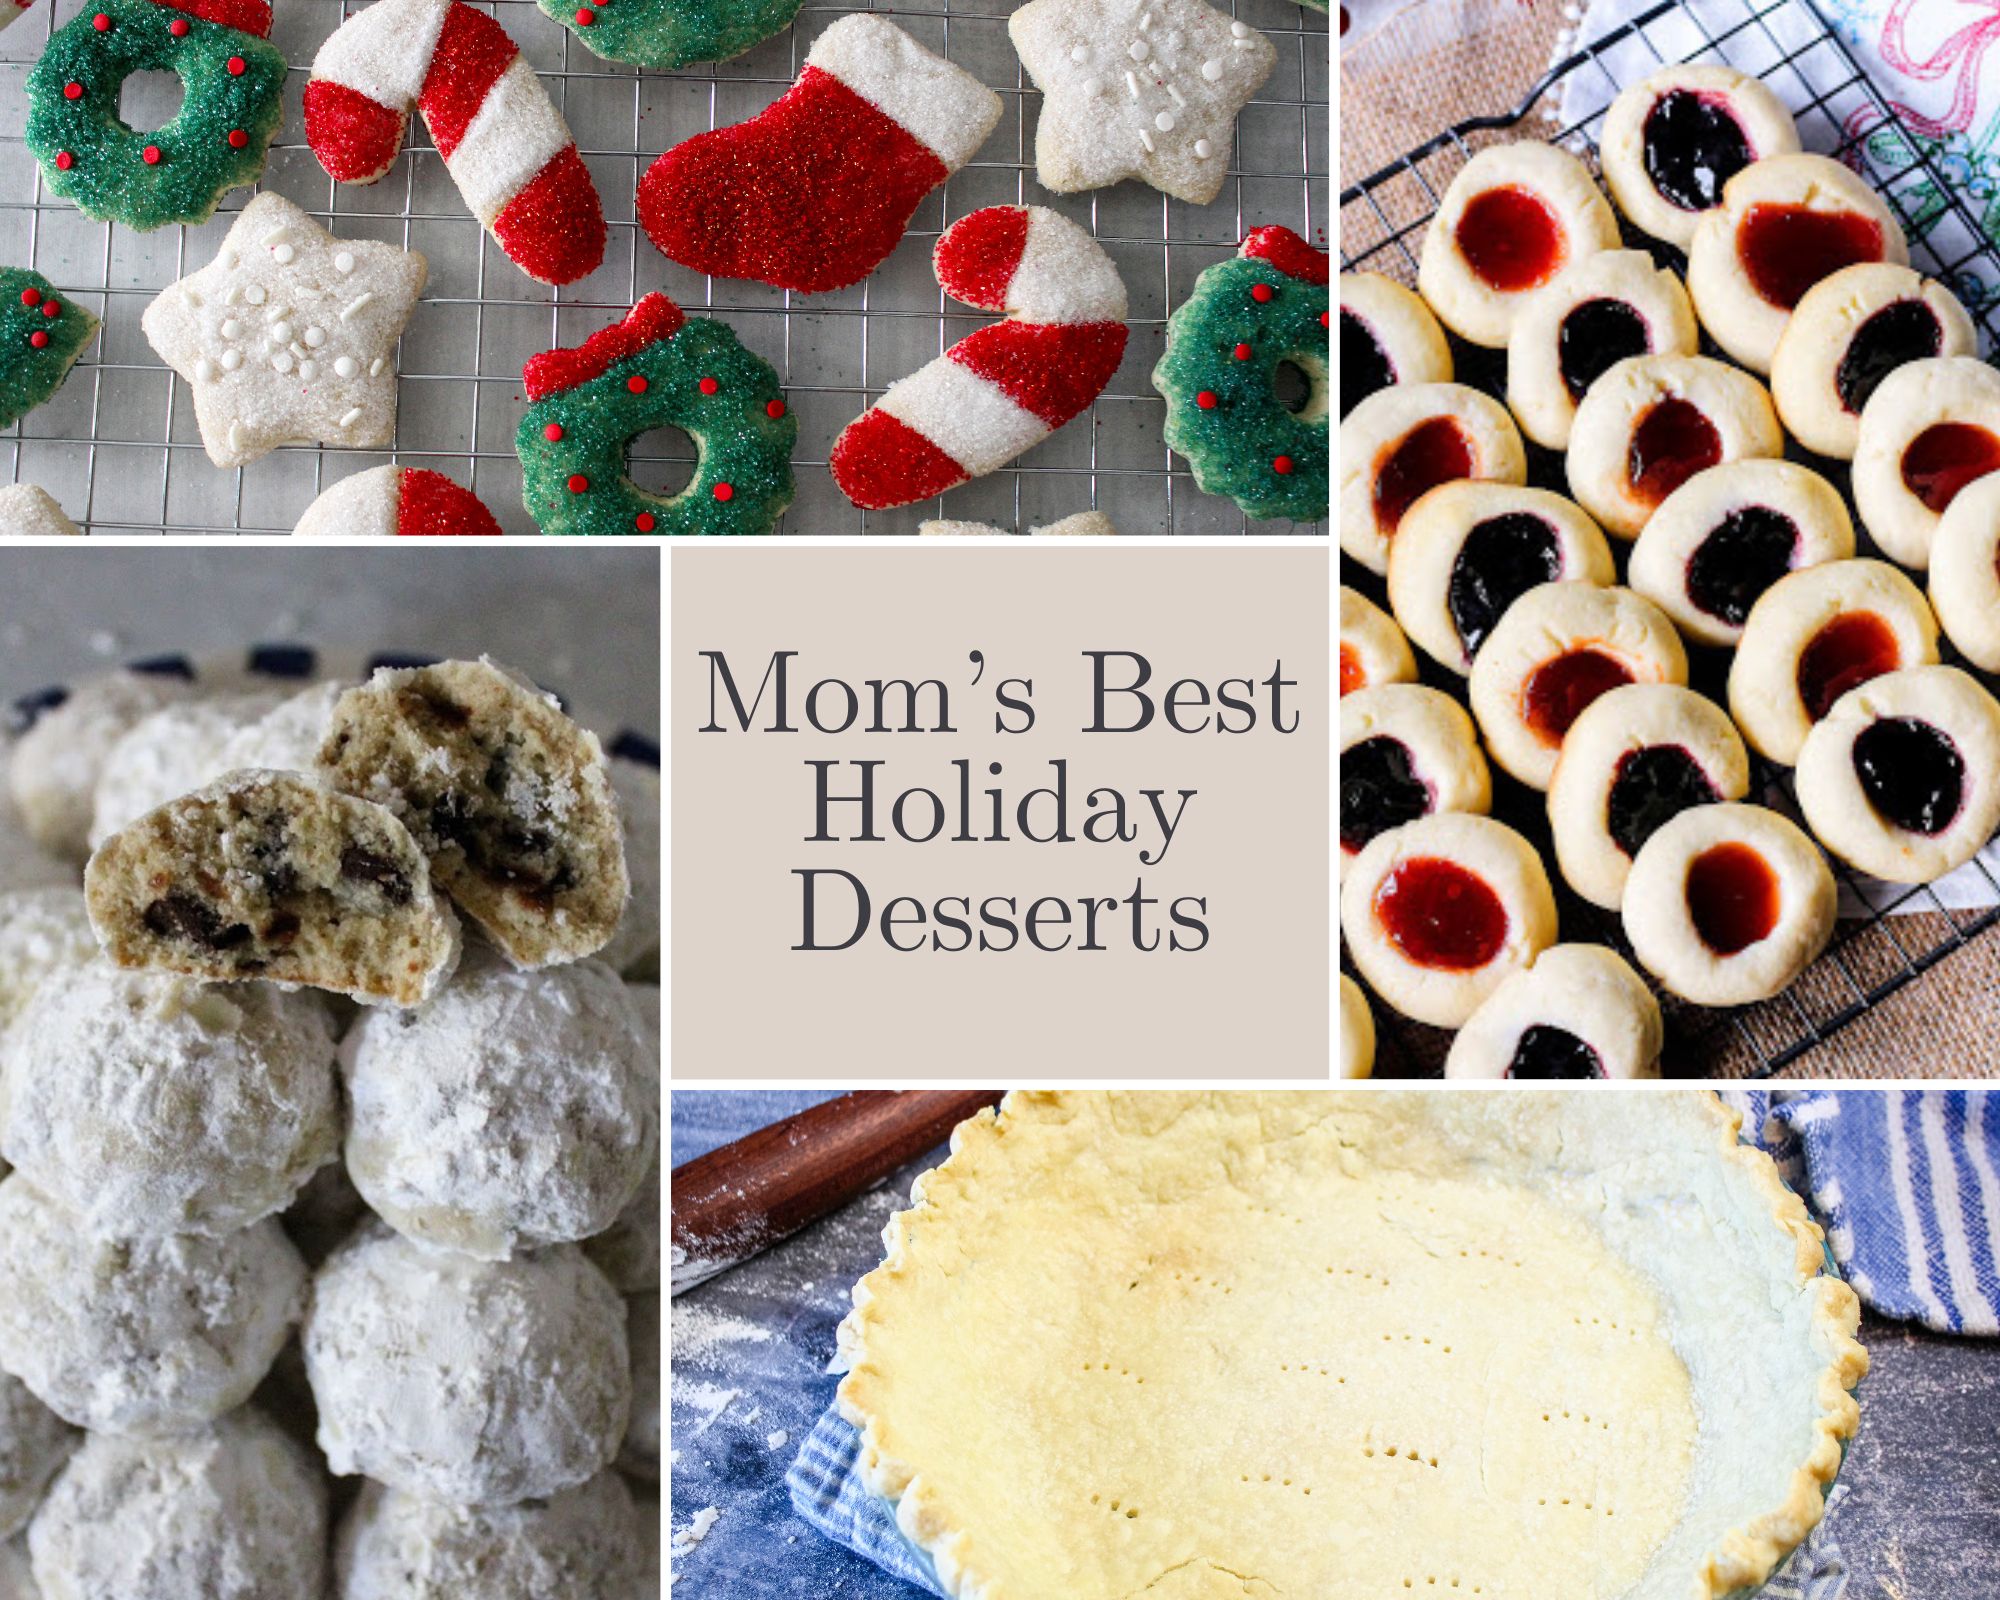 Mom’s Best Holiday Desserts